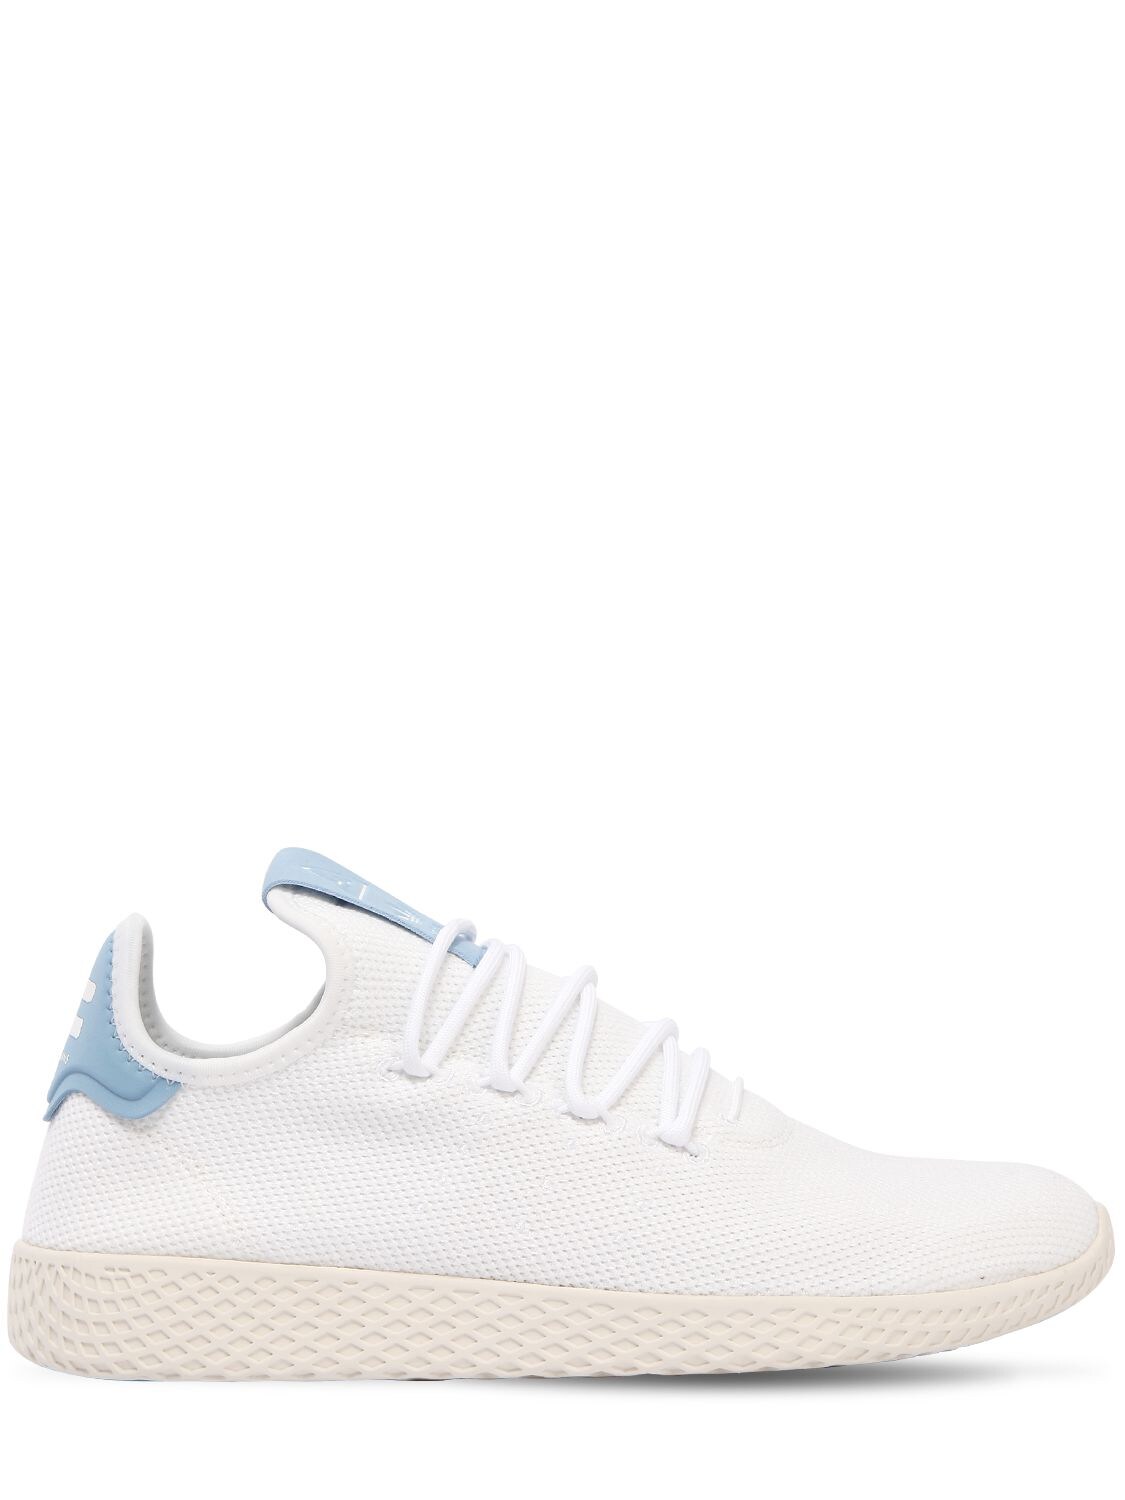 Adidas Originals By Pharrell Williams Pw Hu Primeknit Sneakers In White